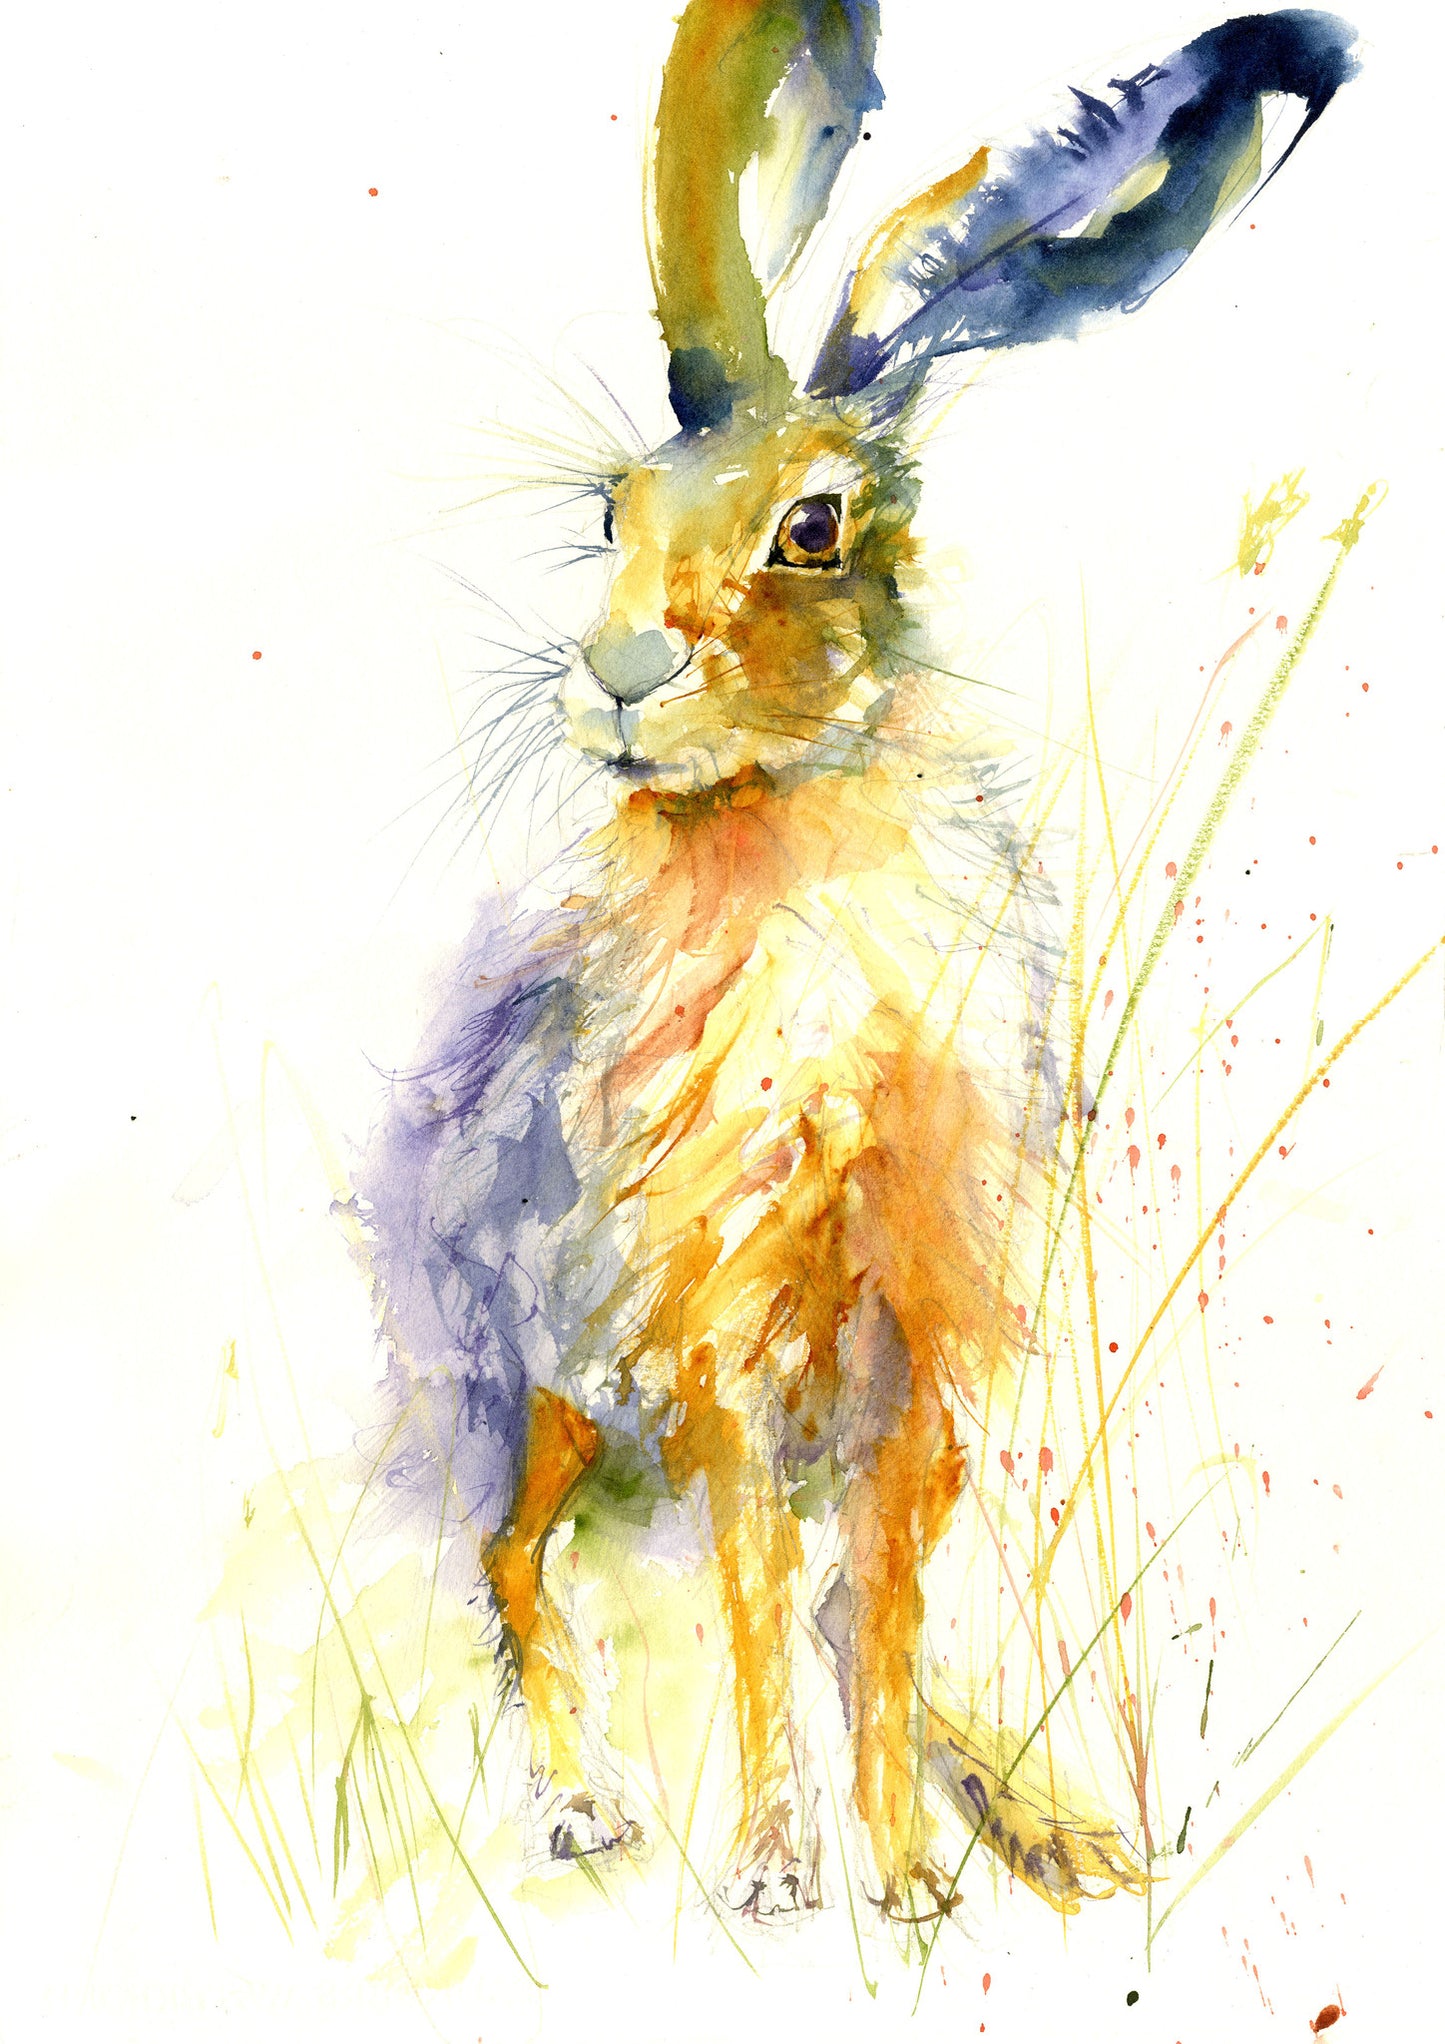 imited edition hare print - Jen Buckley Art limited edition animal art prints